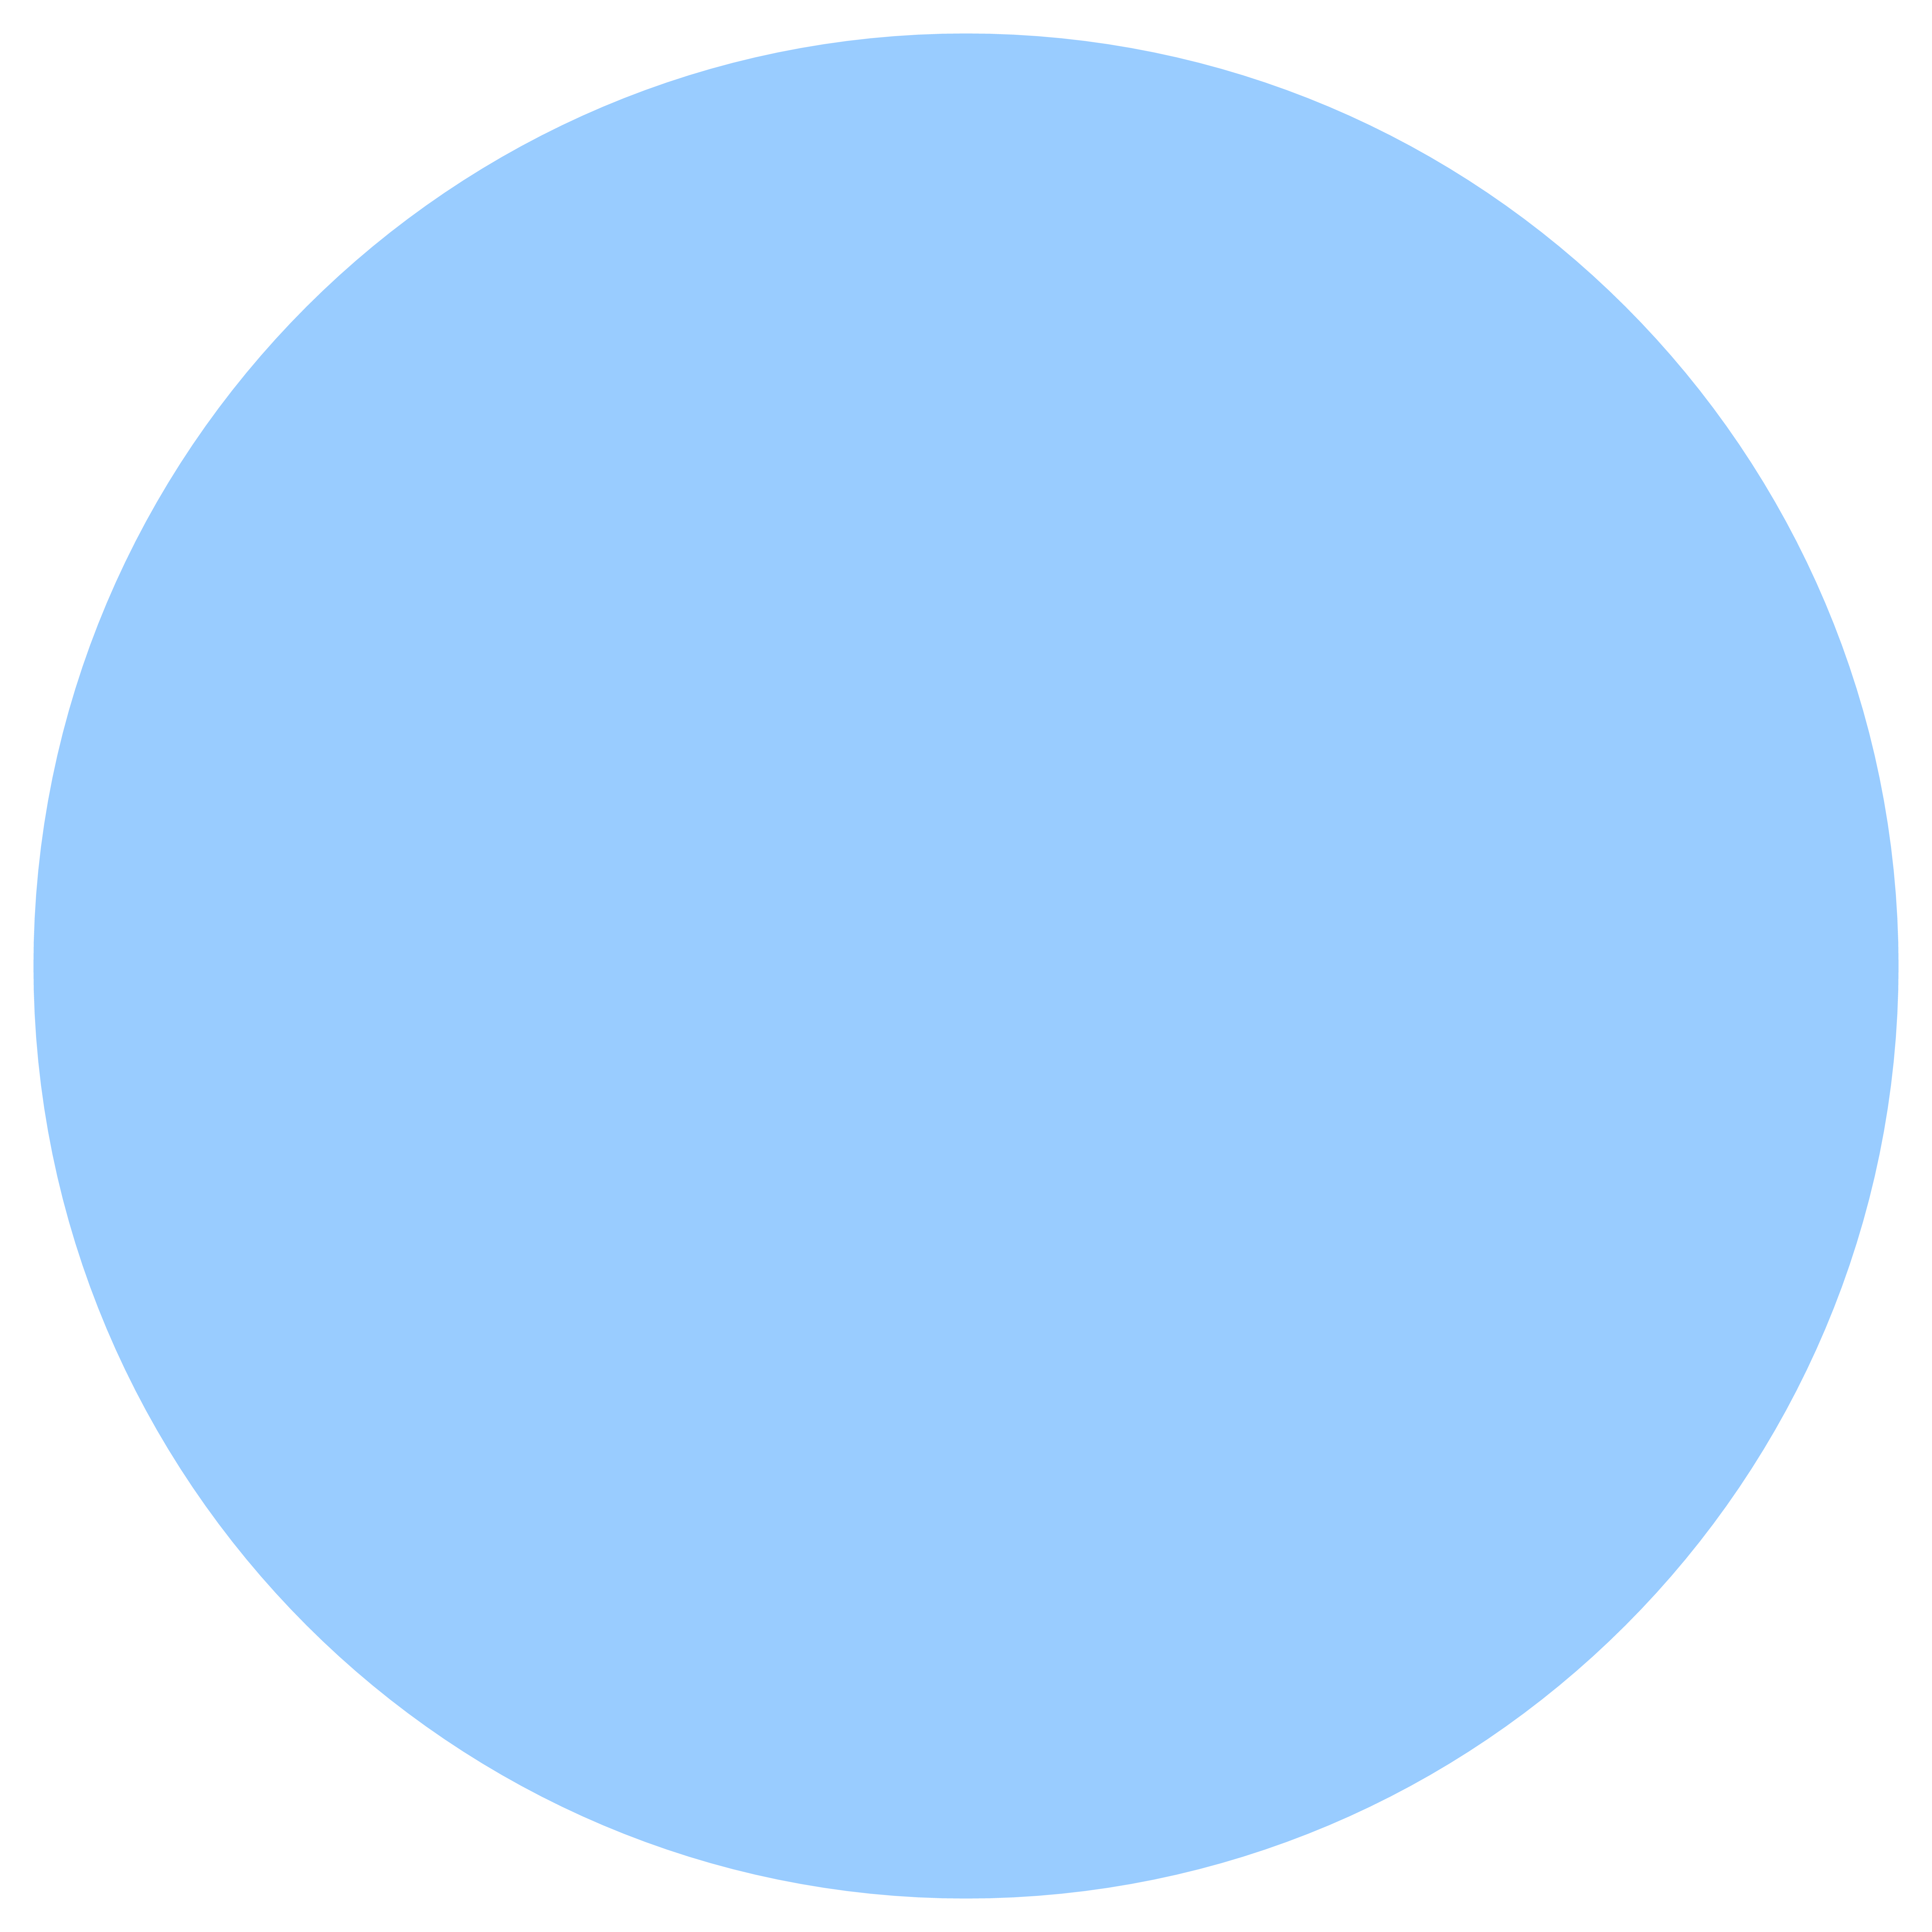 Круг картинка. Геометрические фигуры круг. Круг для детей геометрические фигуры. Бирюзовый круг на прозрачном фоне. Фигура круг на прозрачном фоне.